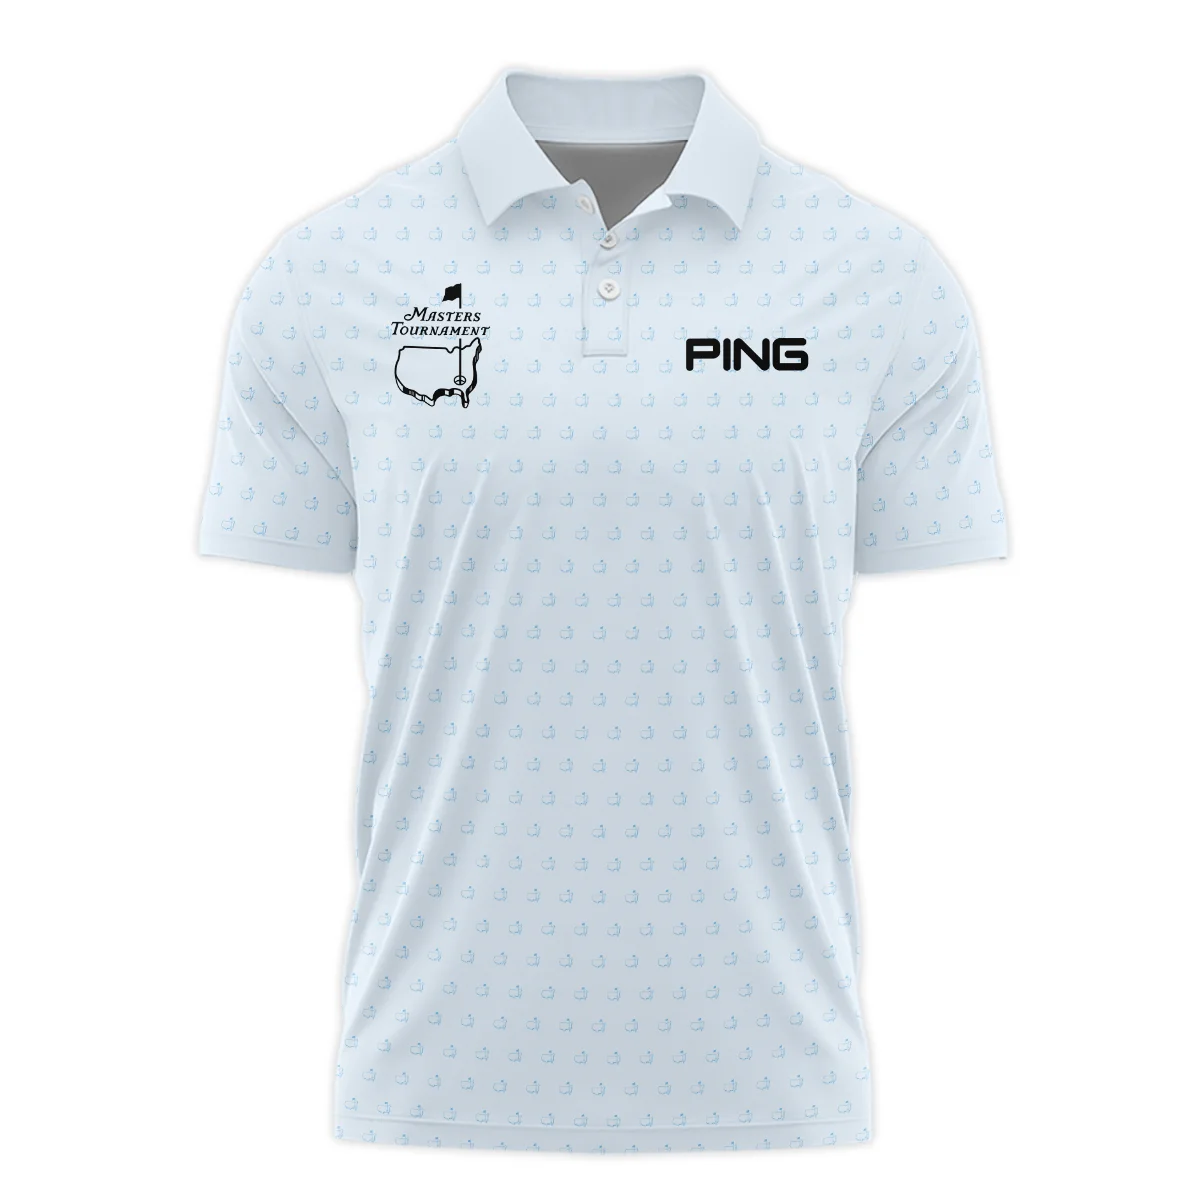 Pattern Masters Tournament Ping Zipper Hoodie Shirt White Light Blue Color Pattern Logo  Zipper Hoodie Shirt